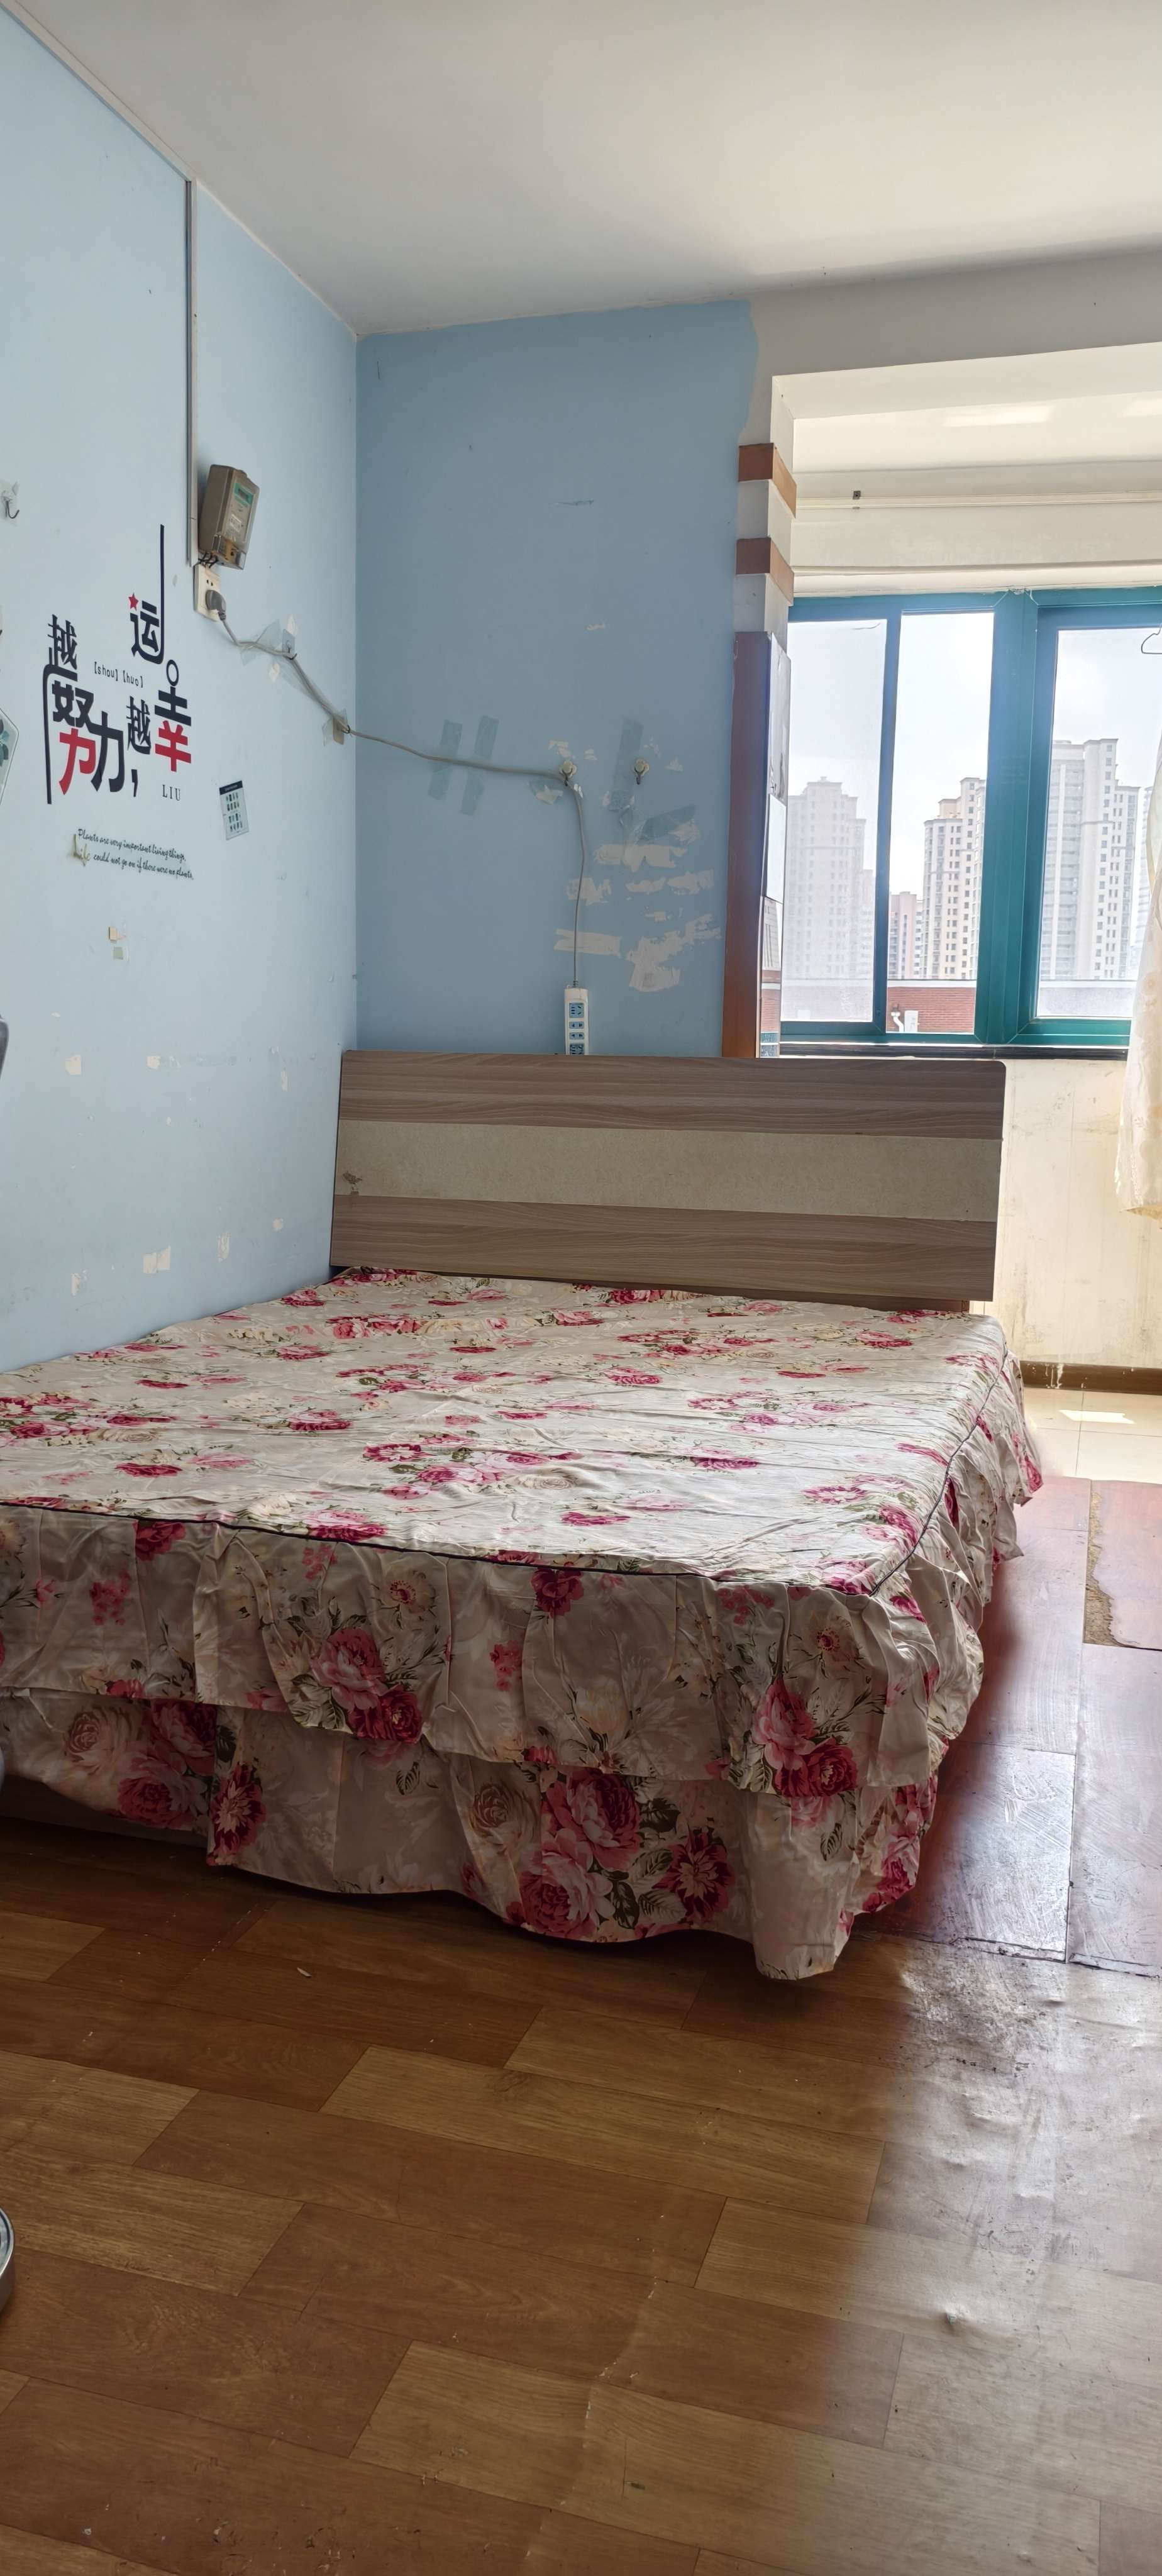 Qingdao-Licang-Cozy Home,Clean&Comfy,No Gender Limit,Hustle & Bustle,Chilled